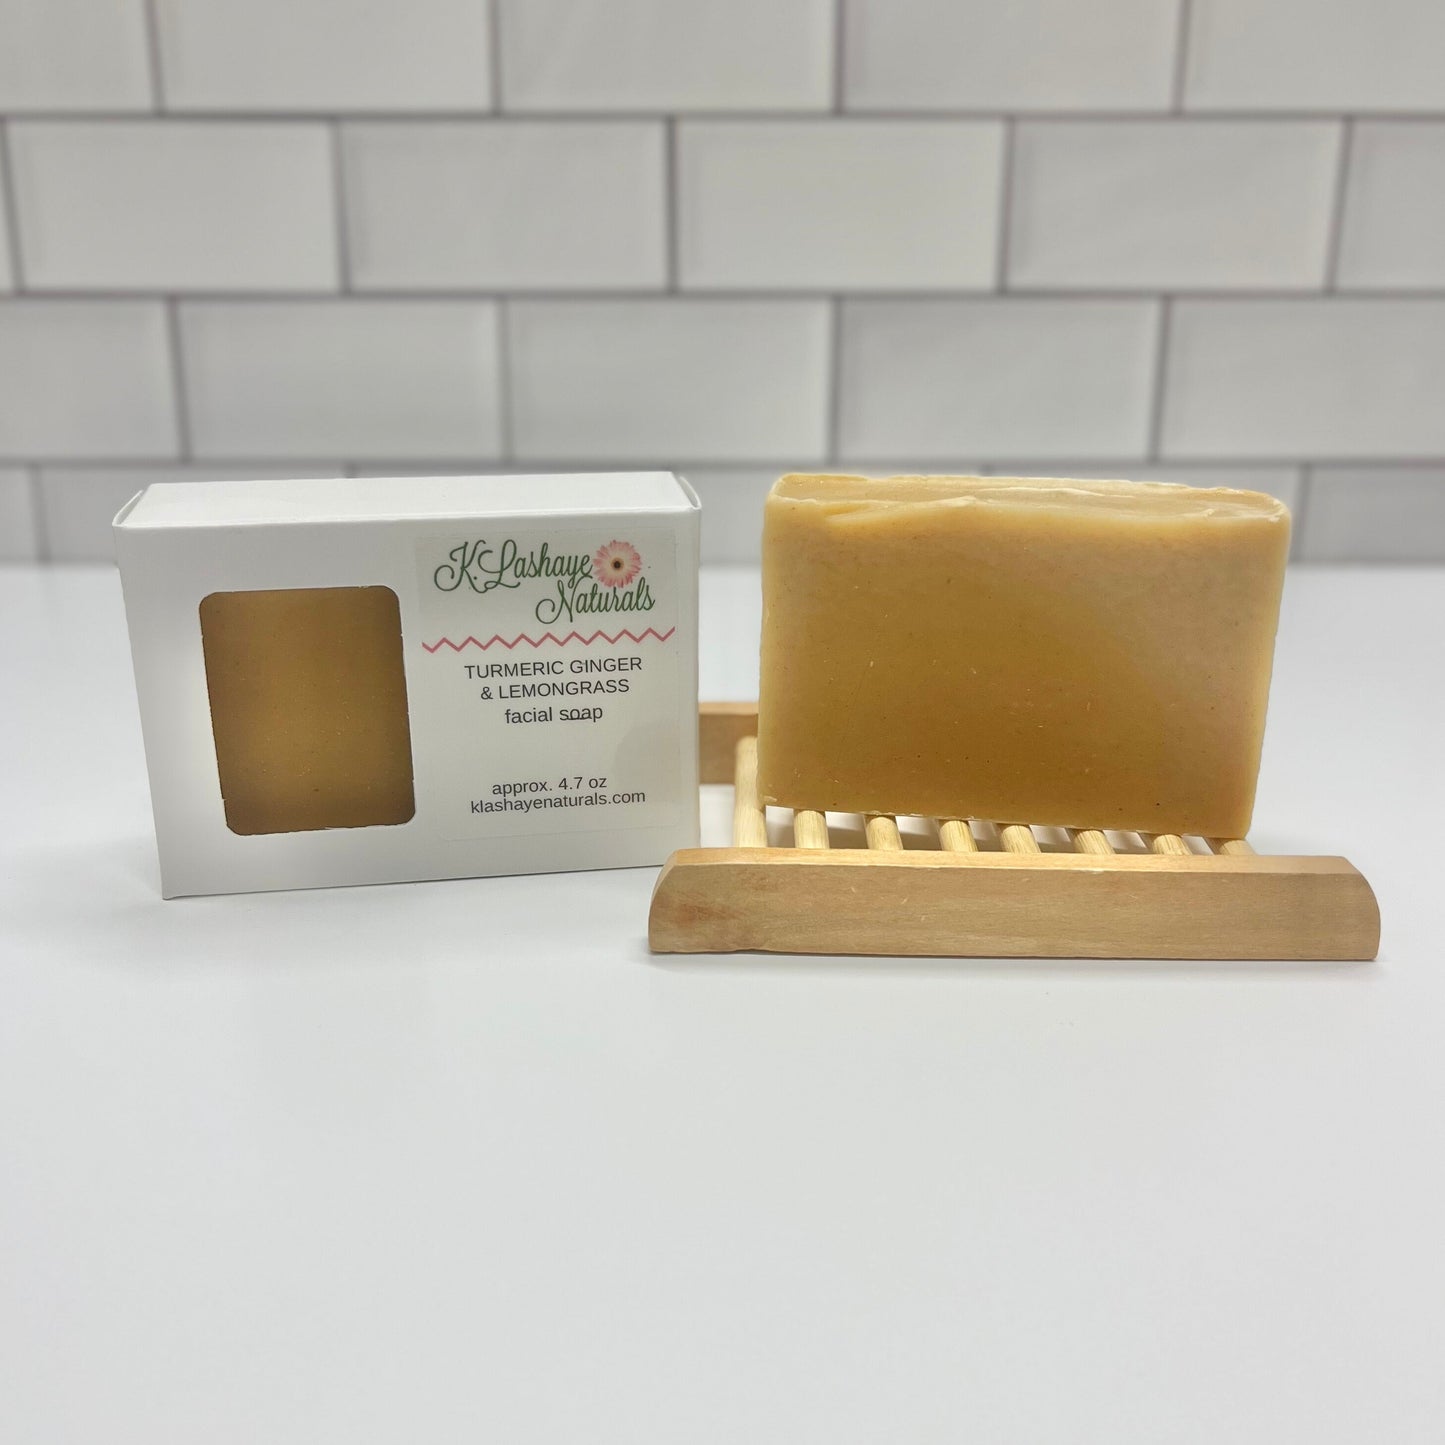 Turmeric Ginger & Lemongrass facial soap